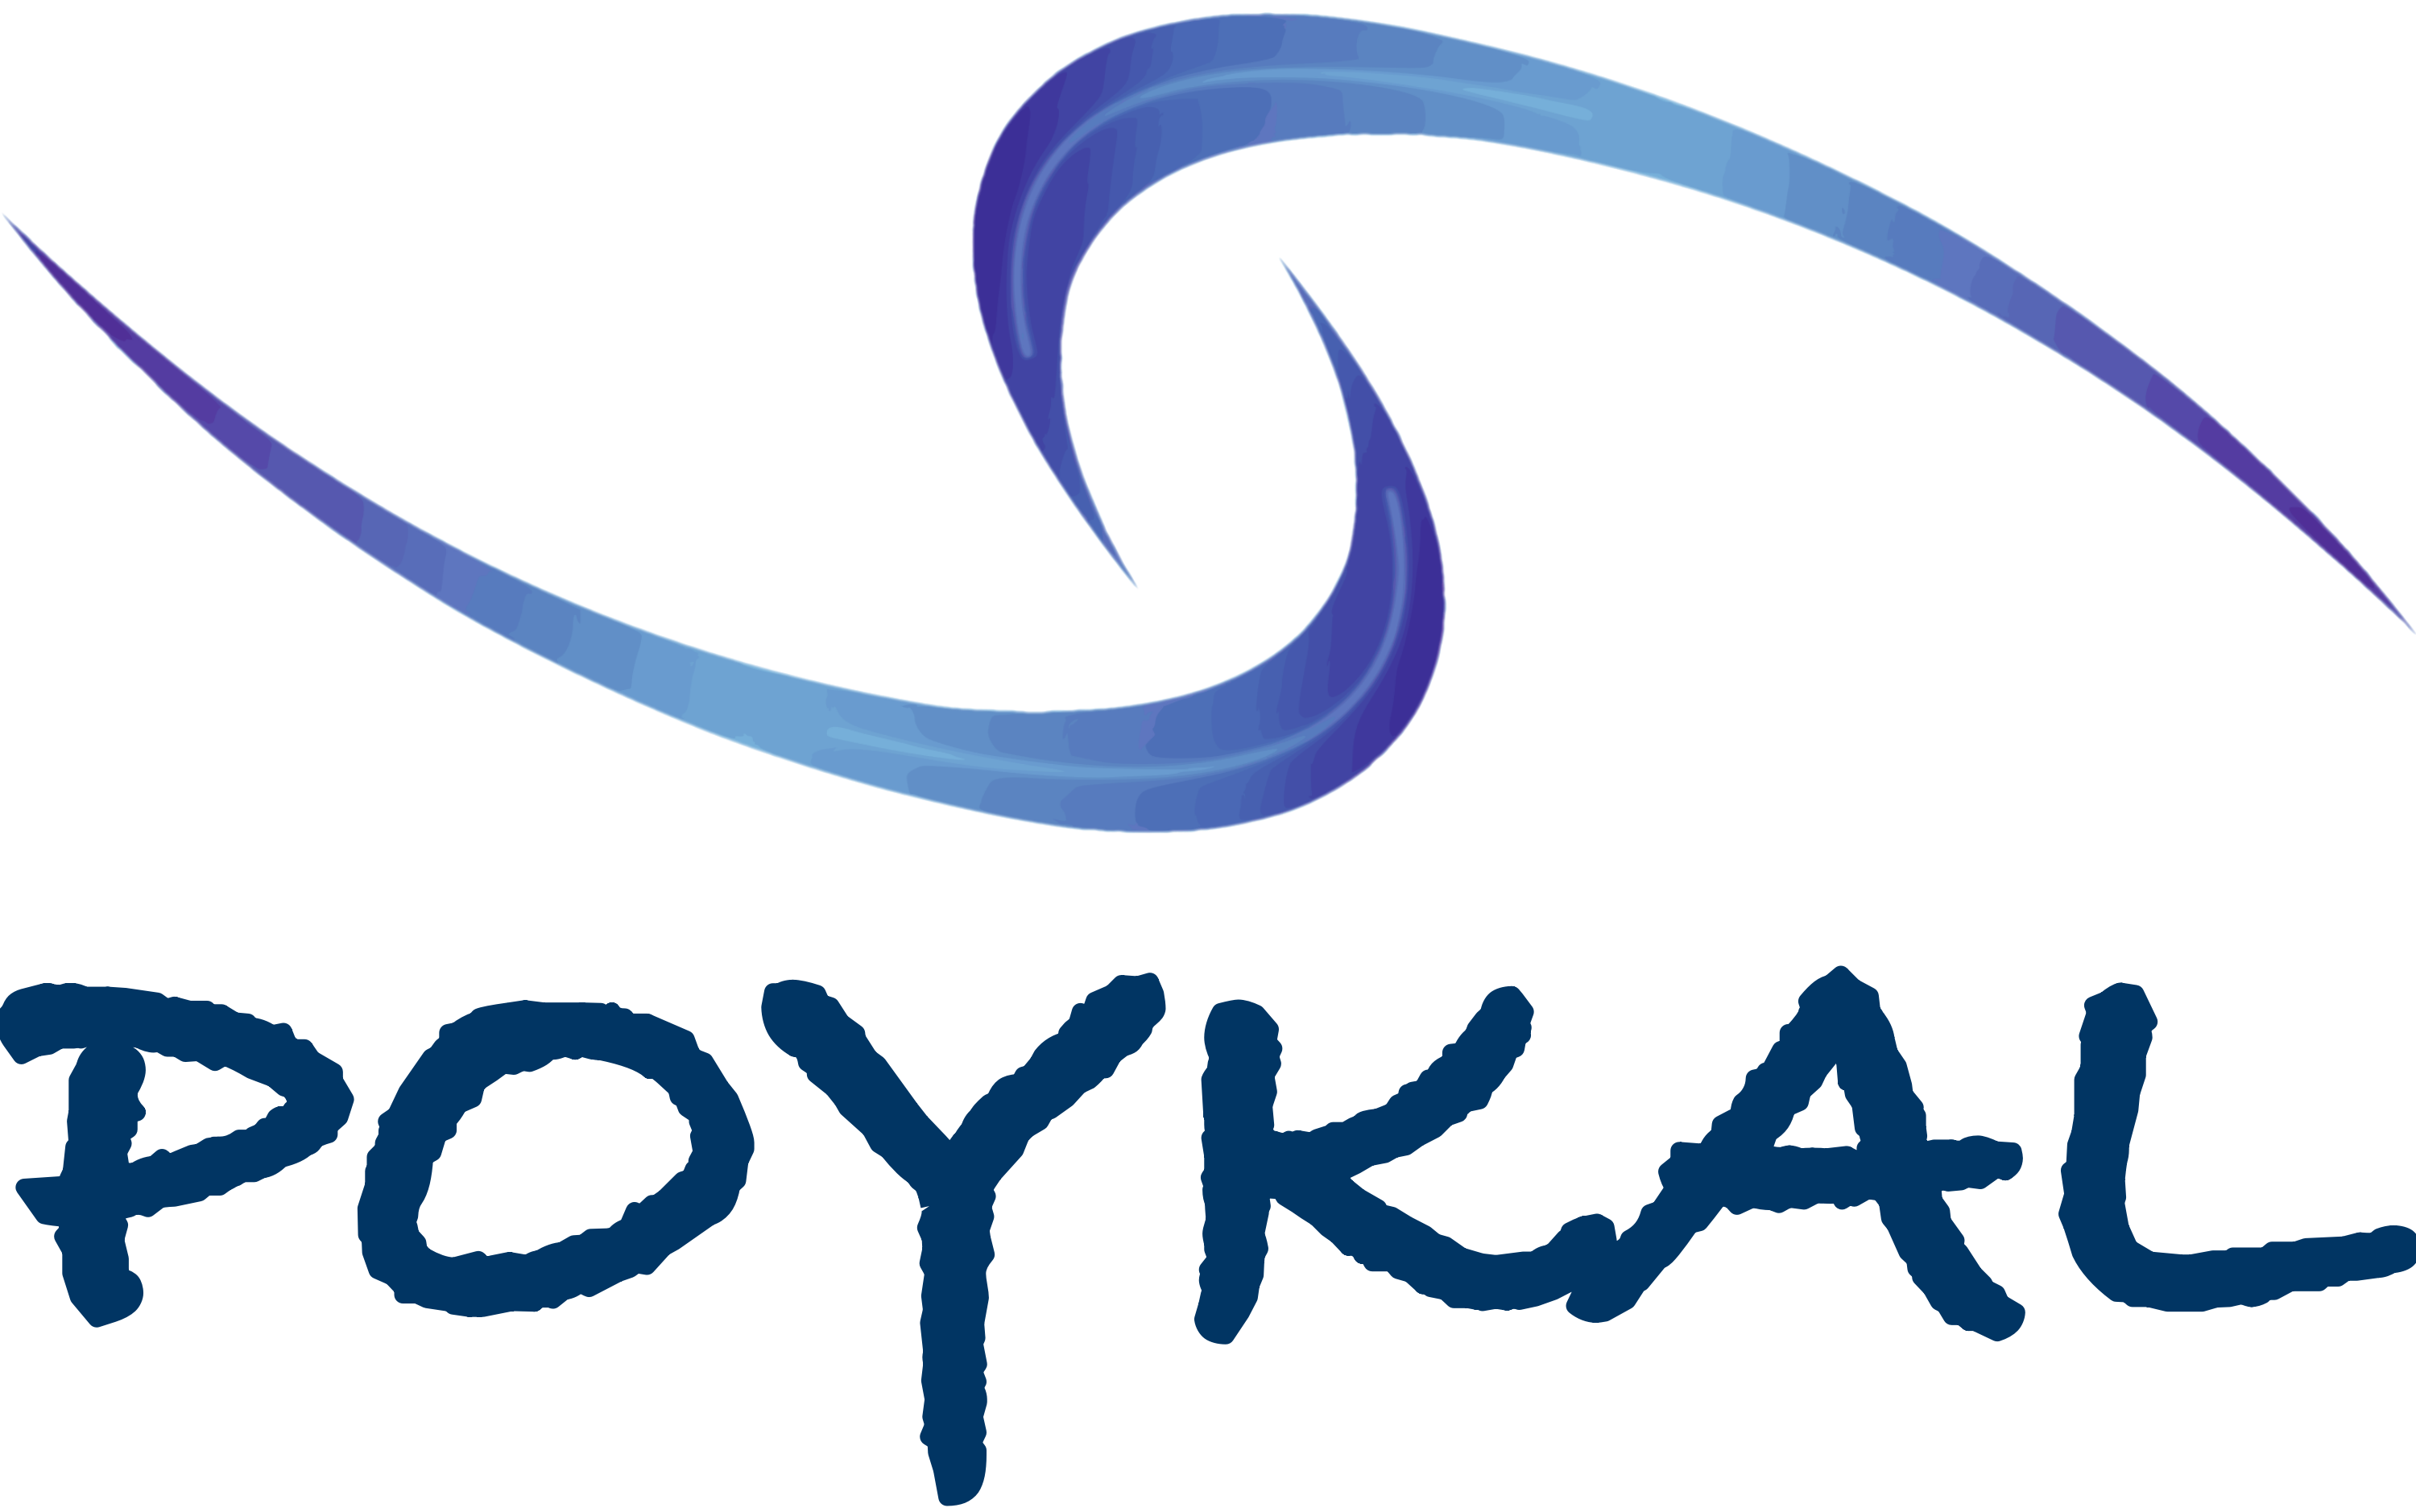 Poykal Group Company